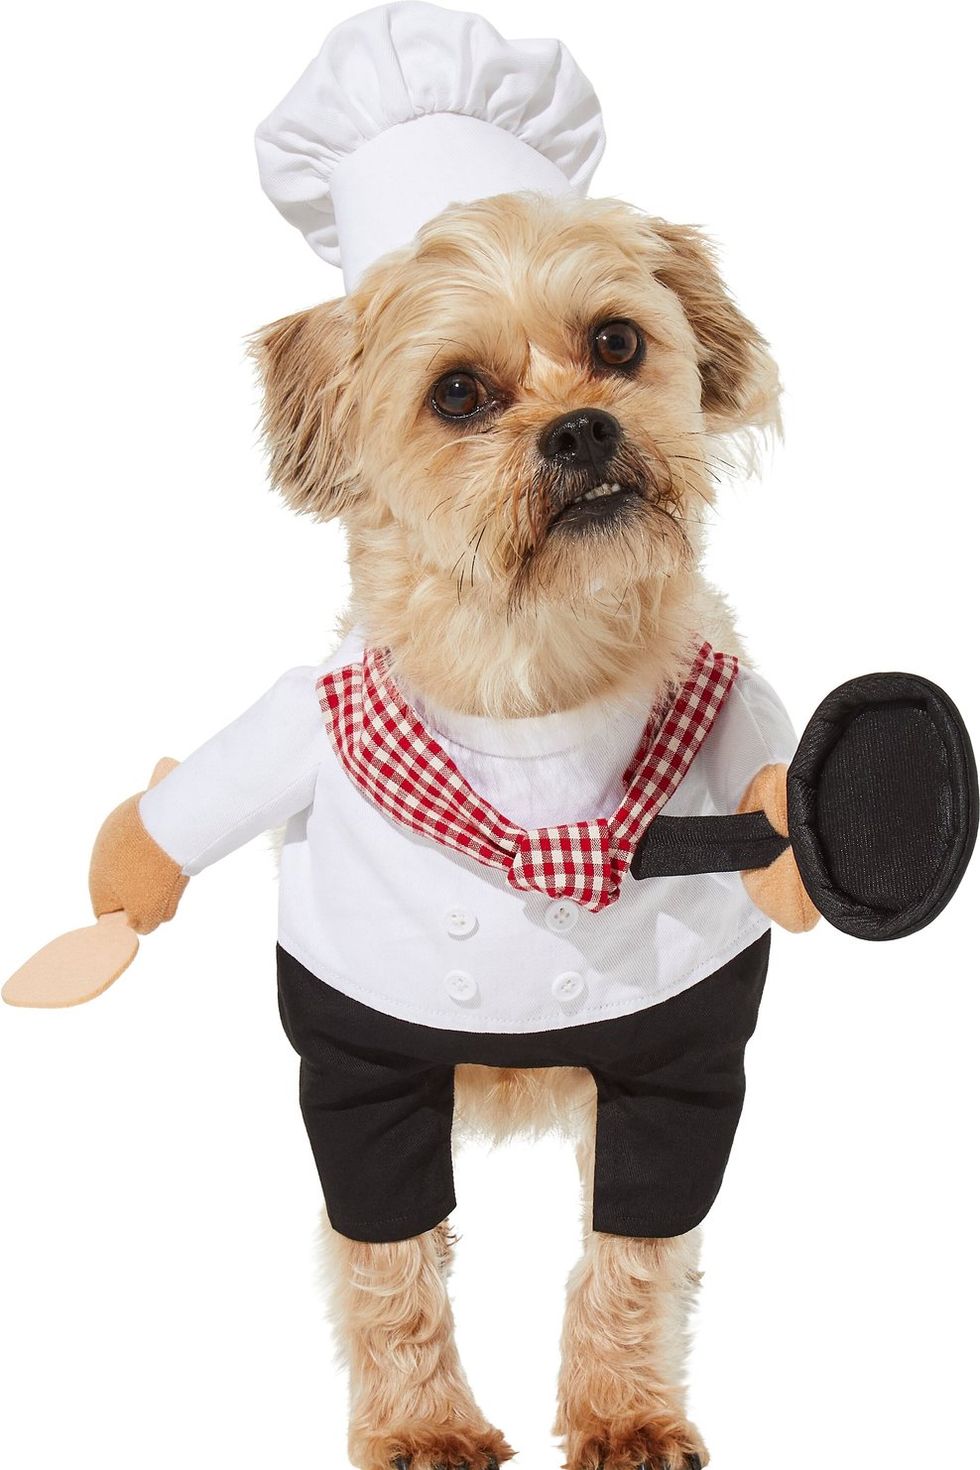 Walking Chef Dog Costume